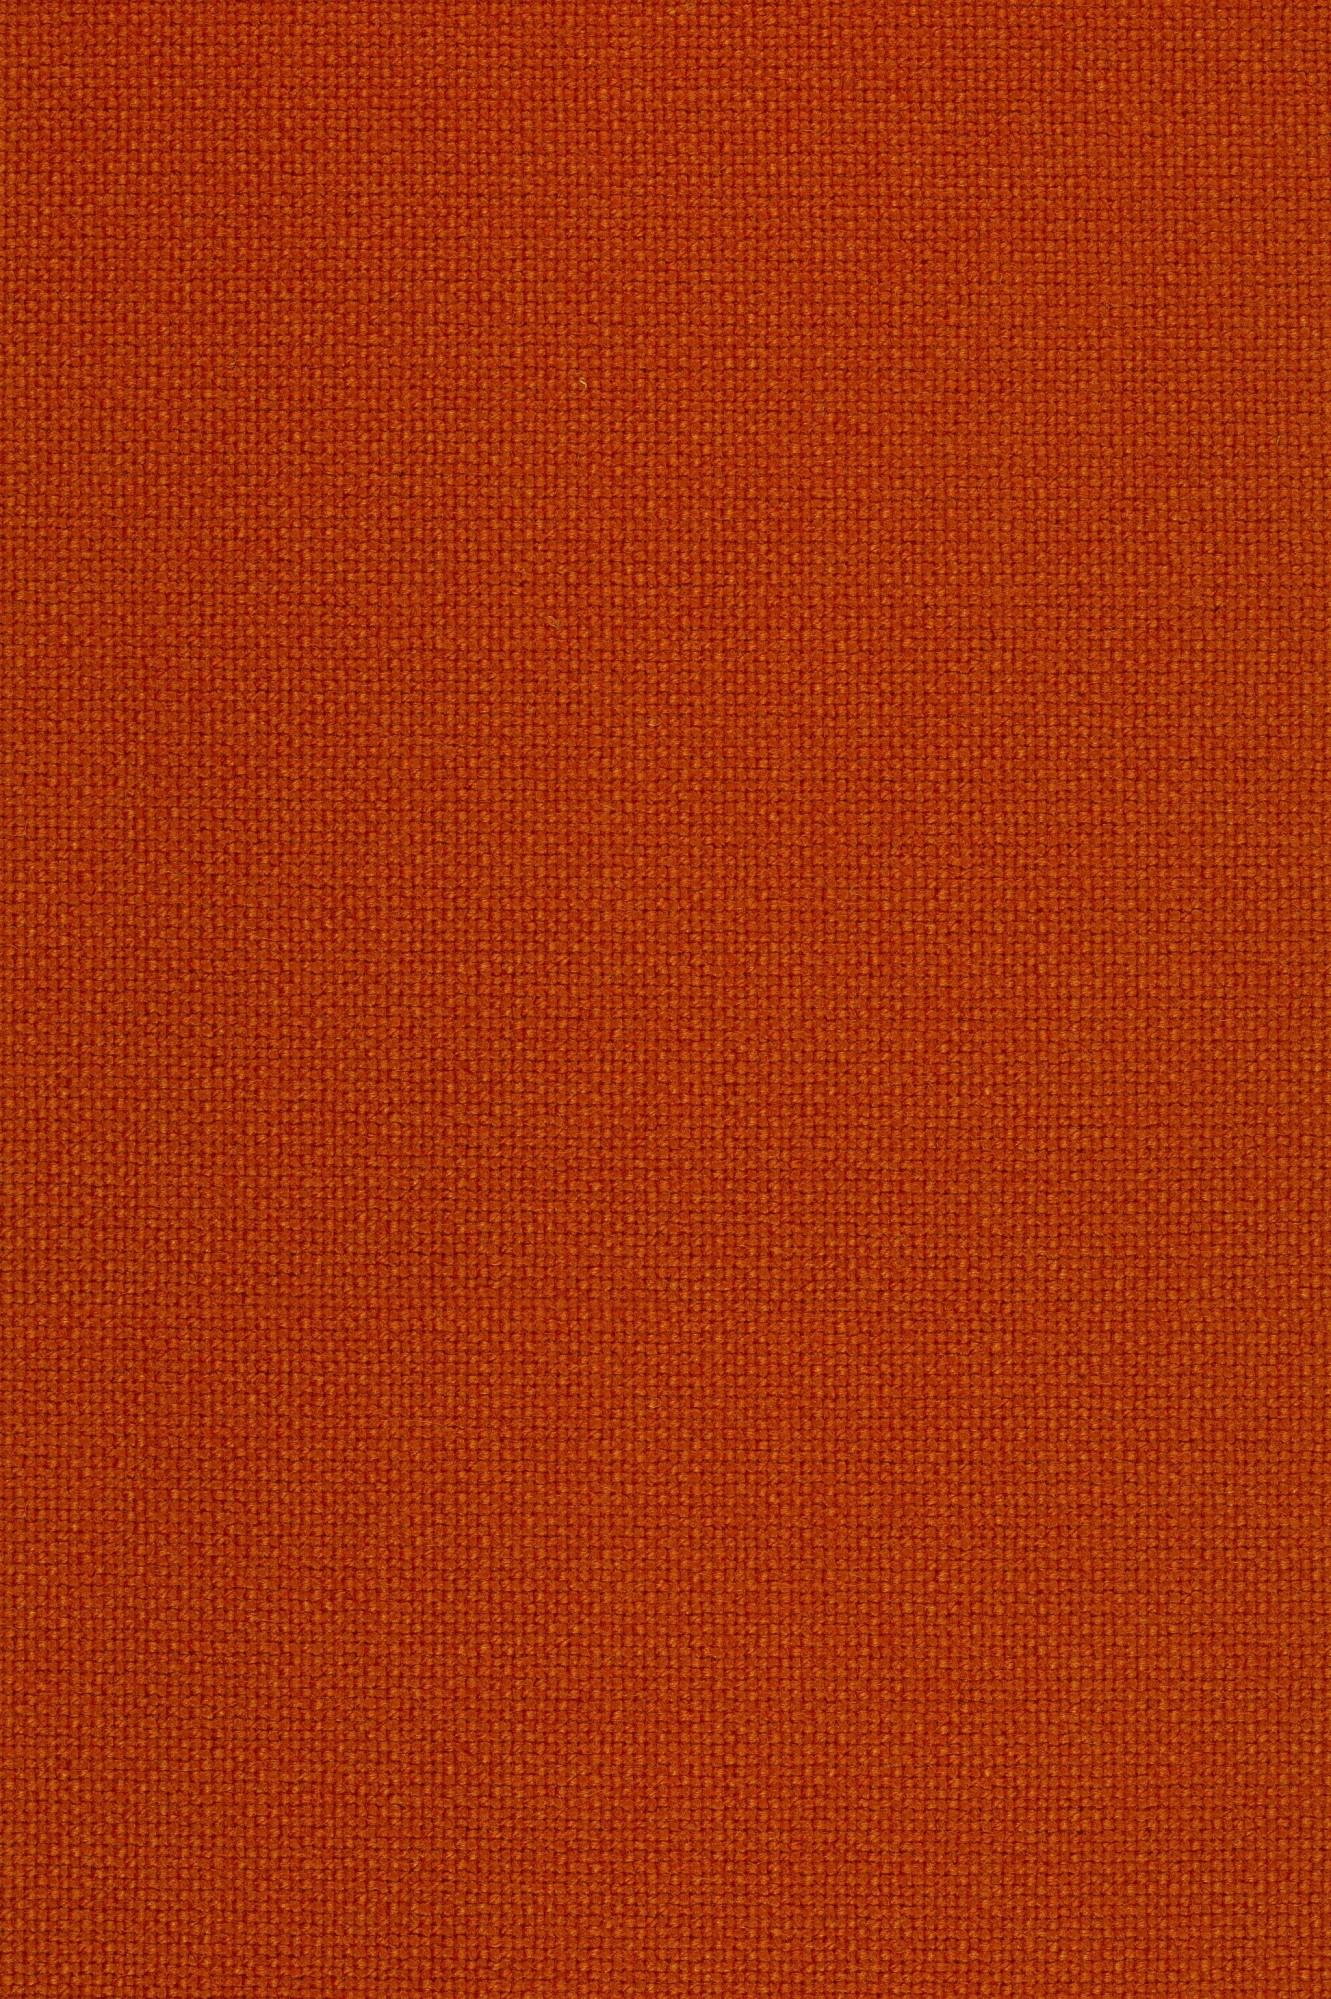 Fabric sample Hallingdal 65 600 red